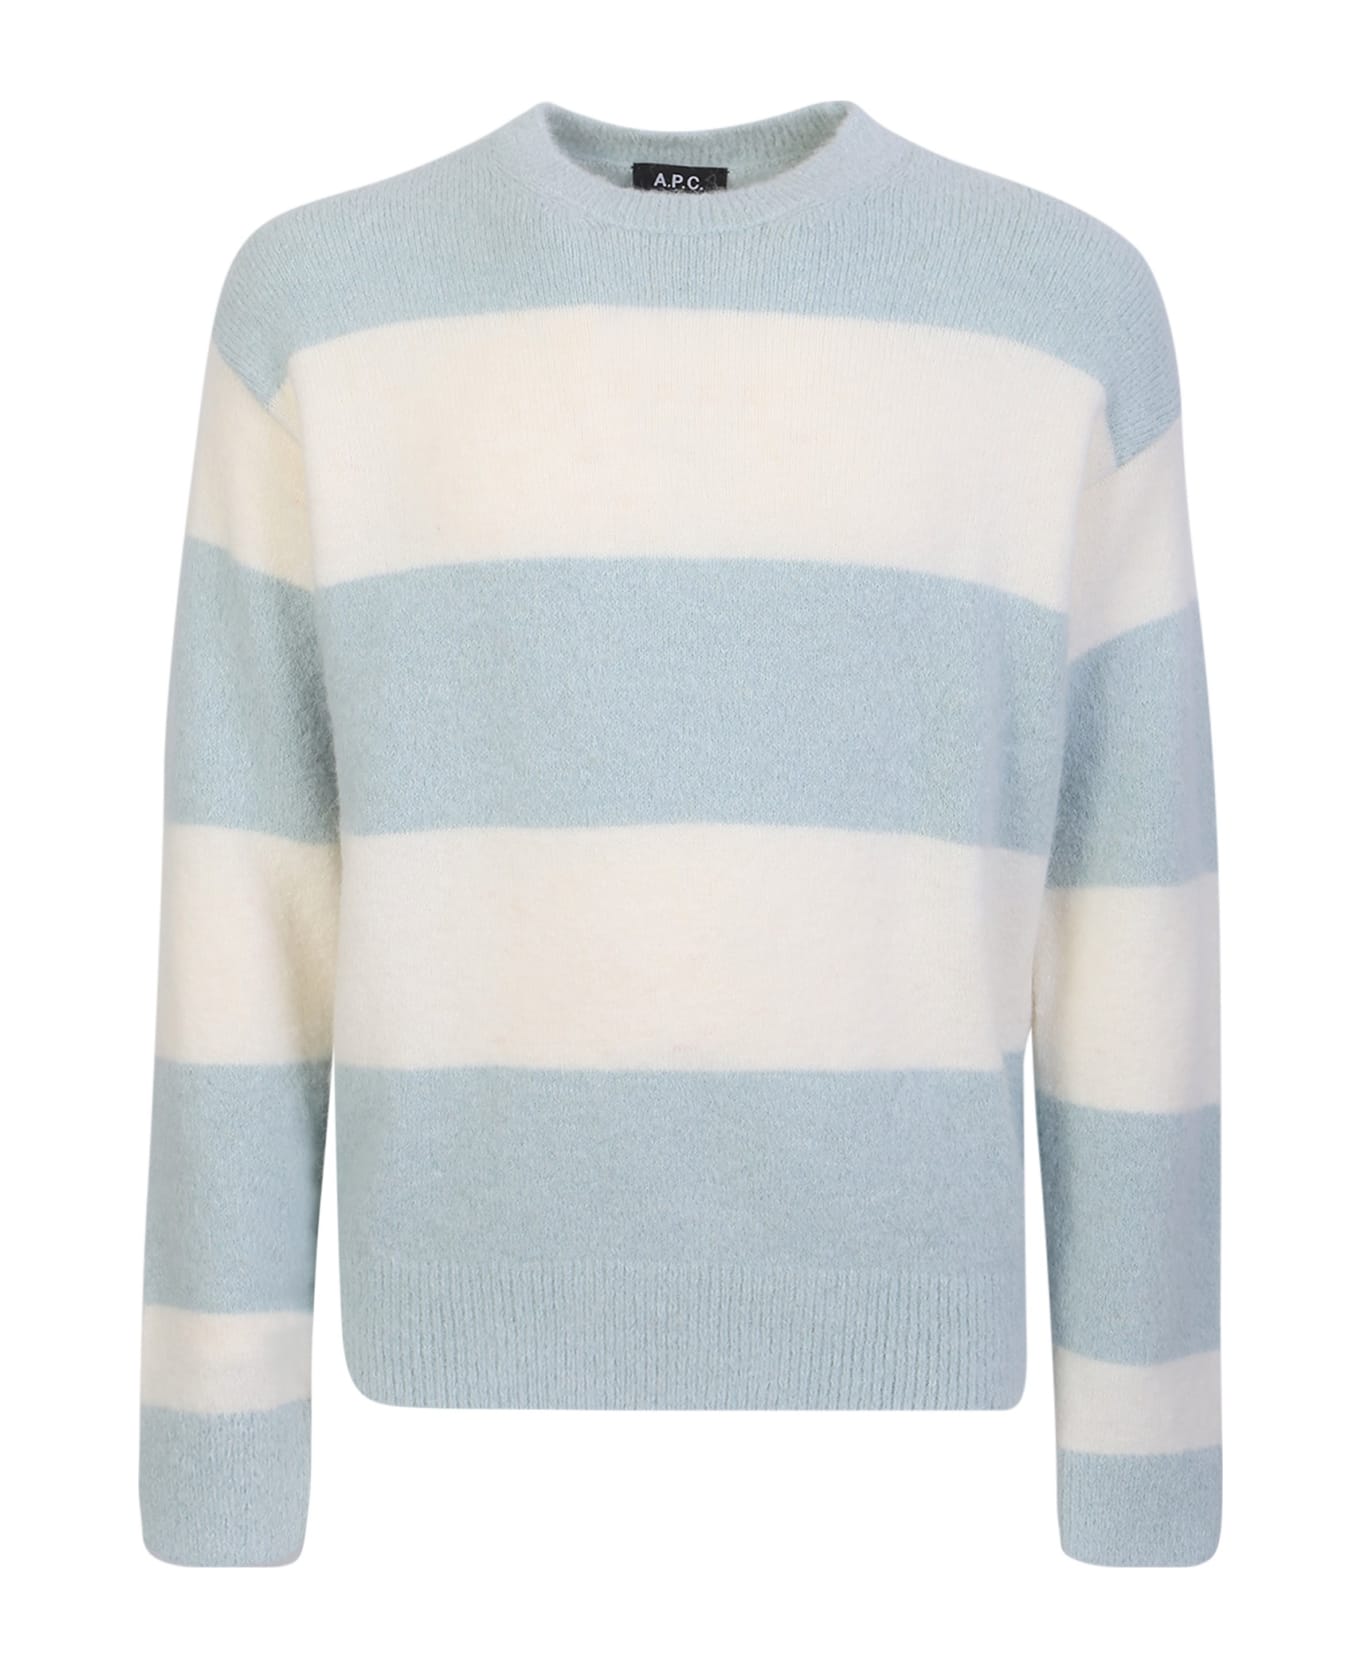 A.P.C. Apc Striped Sky Blue/white Crewneck Sweater - Blue